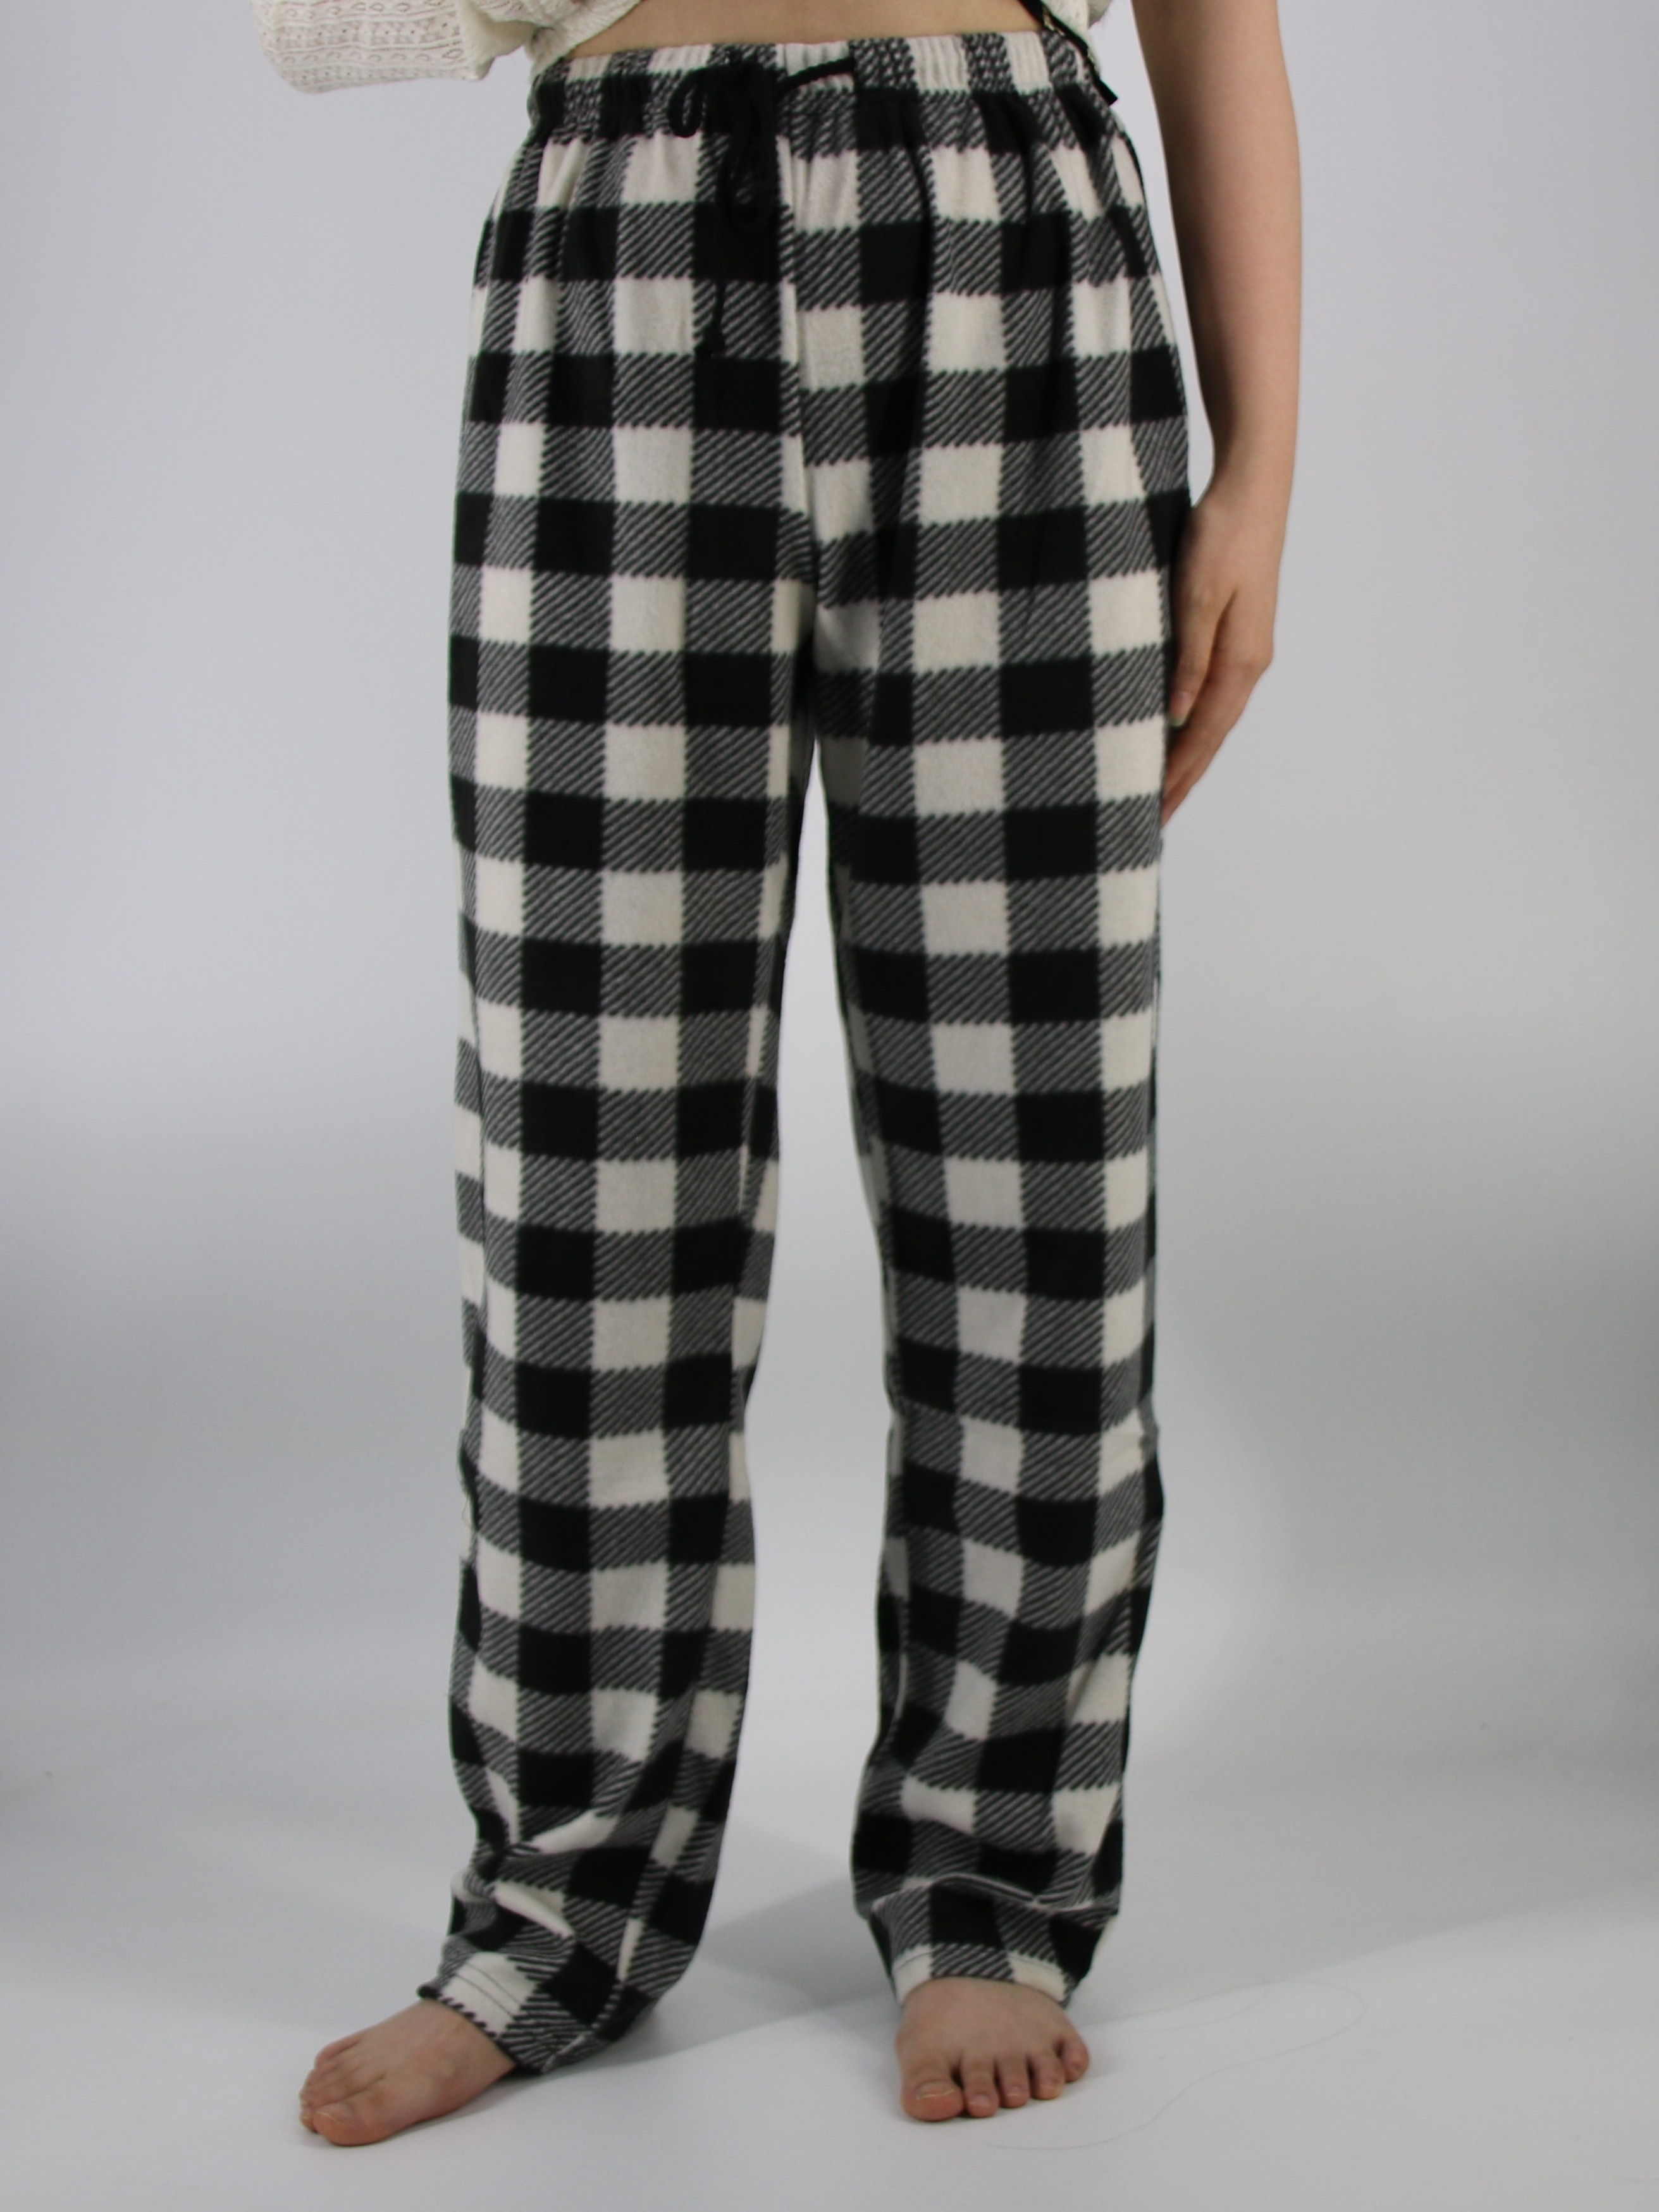 Womens Flannel Pajama Pants Winter Plush Fluffy Pajama Pants with Pockets  Plaid Sleepwear Bottoms 